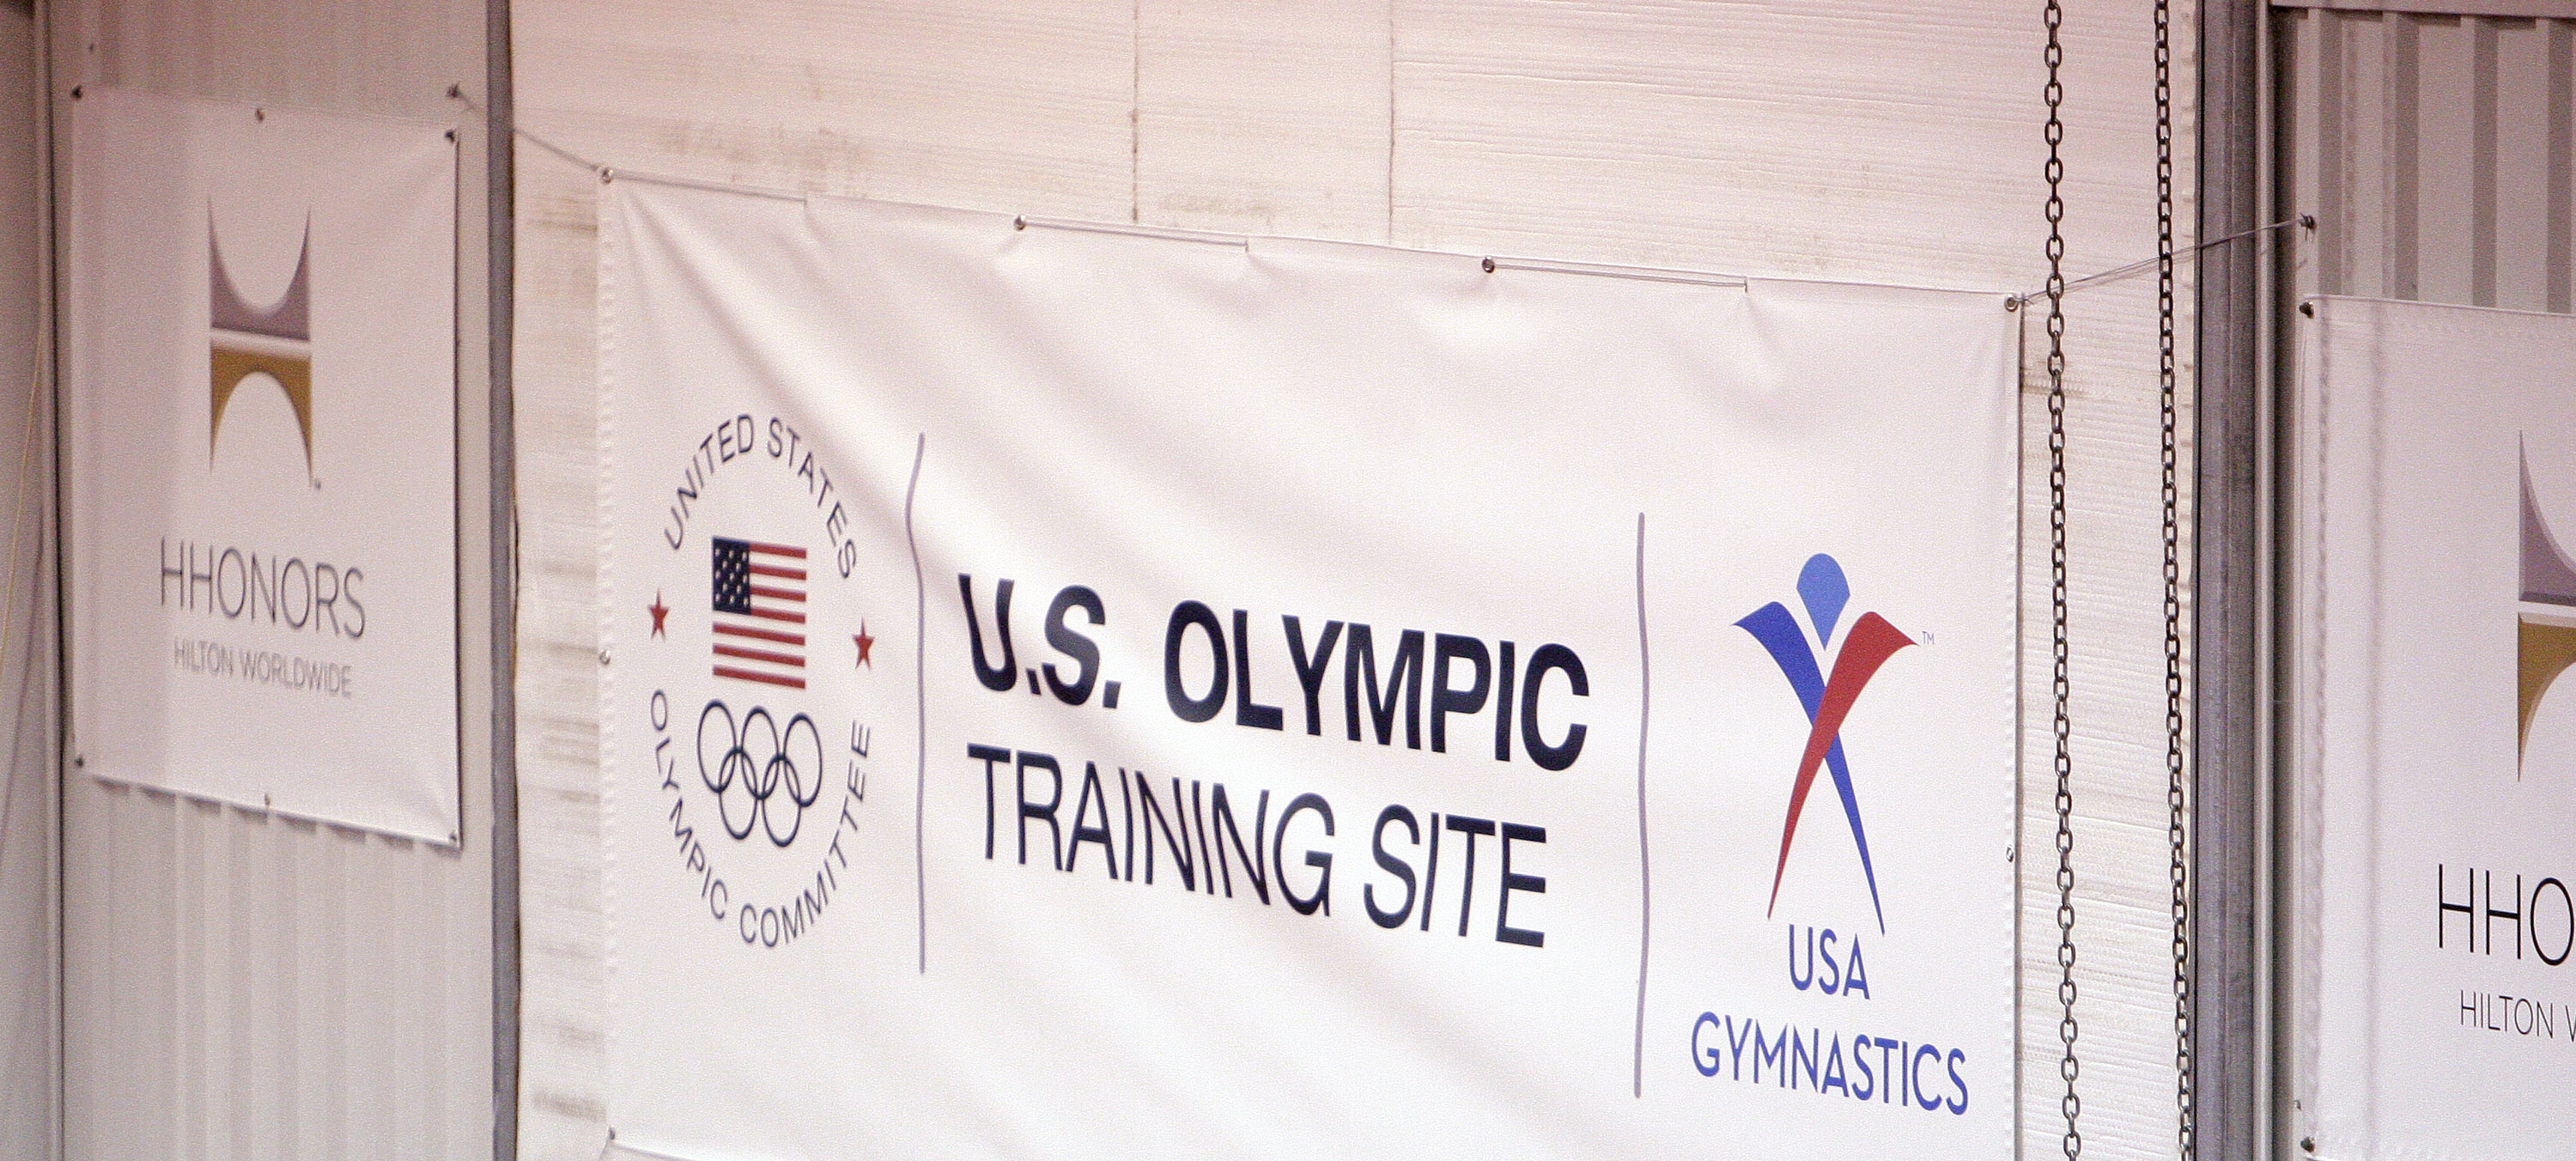 Hilton Announces Sponsorship With USA Gymnastics Team